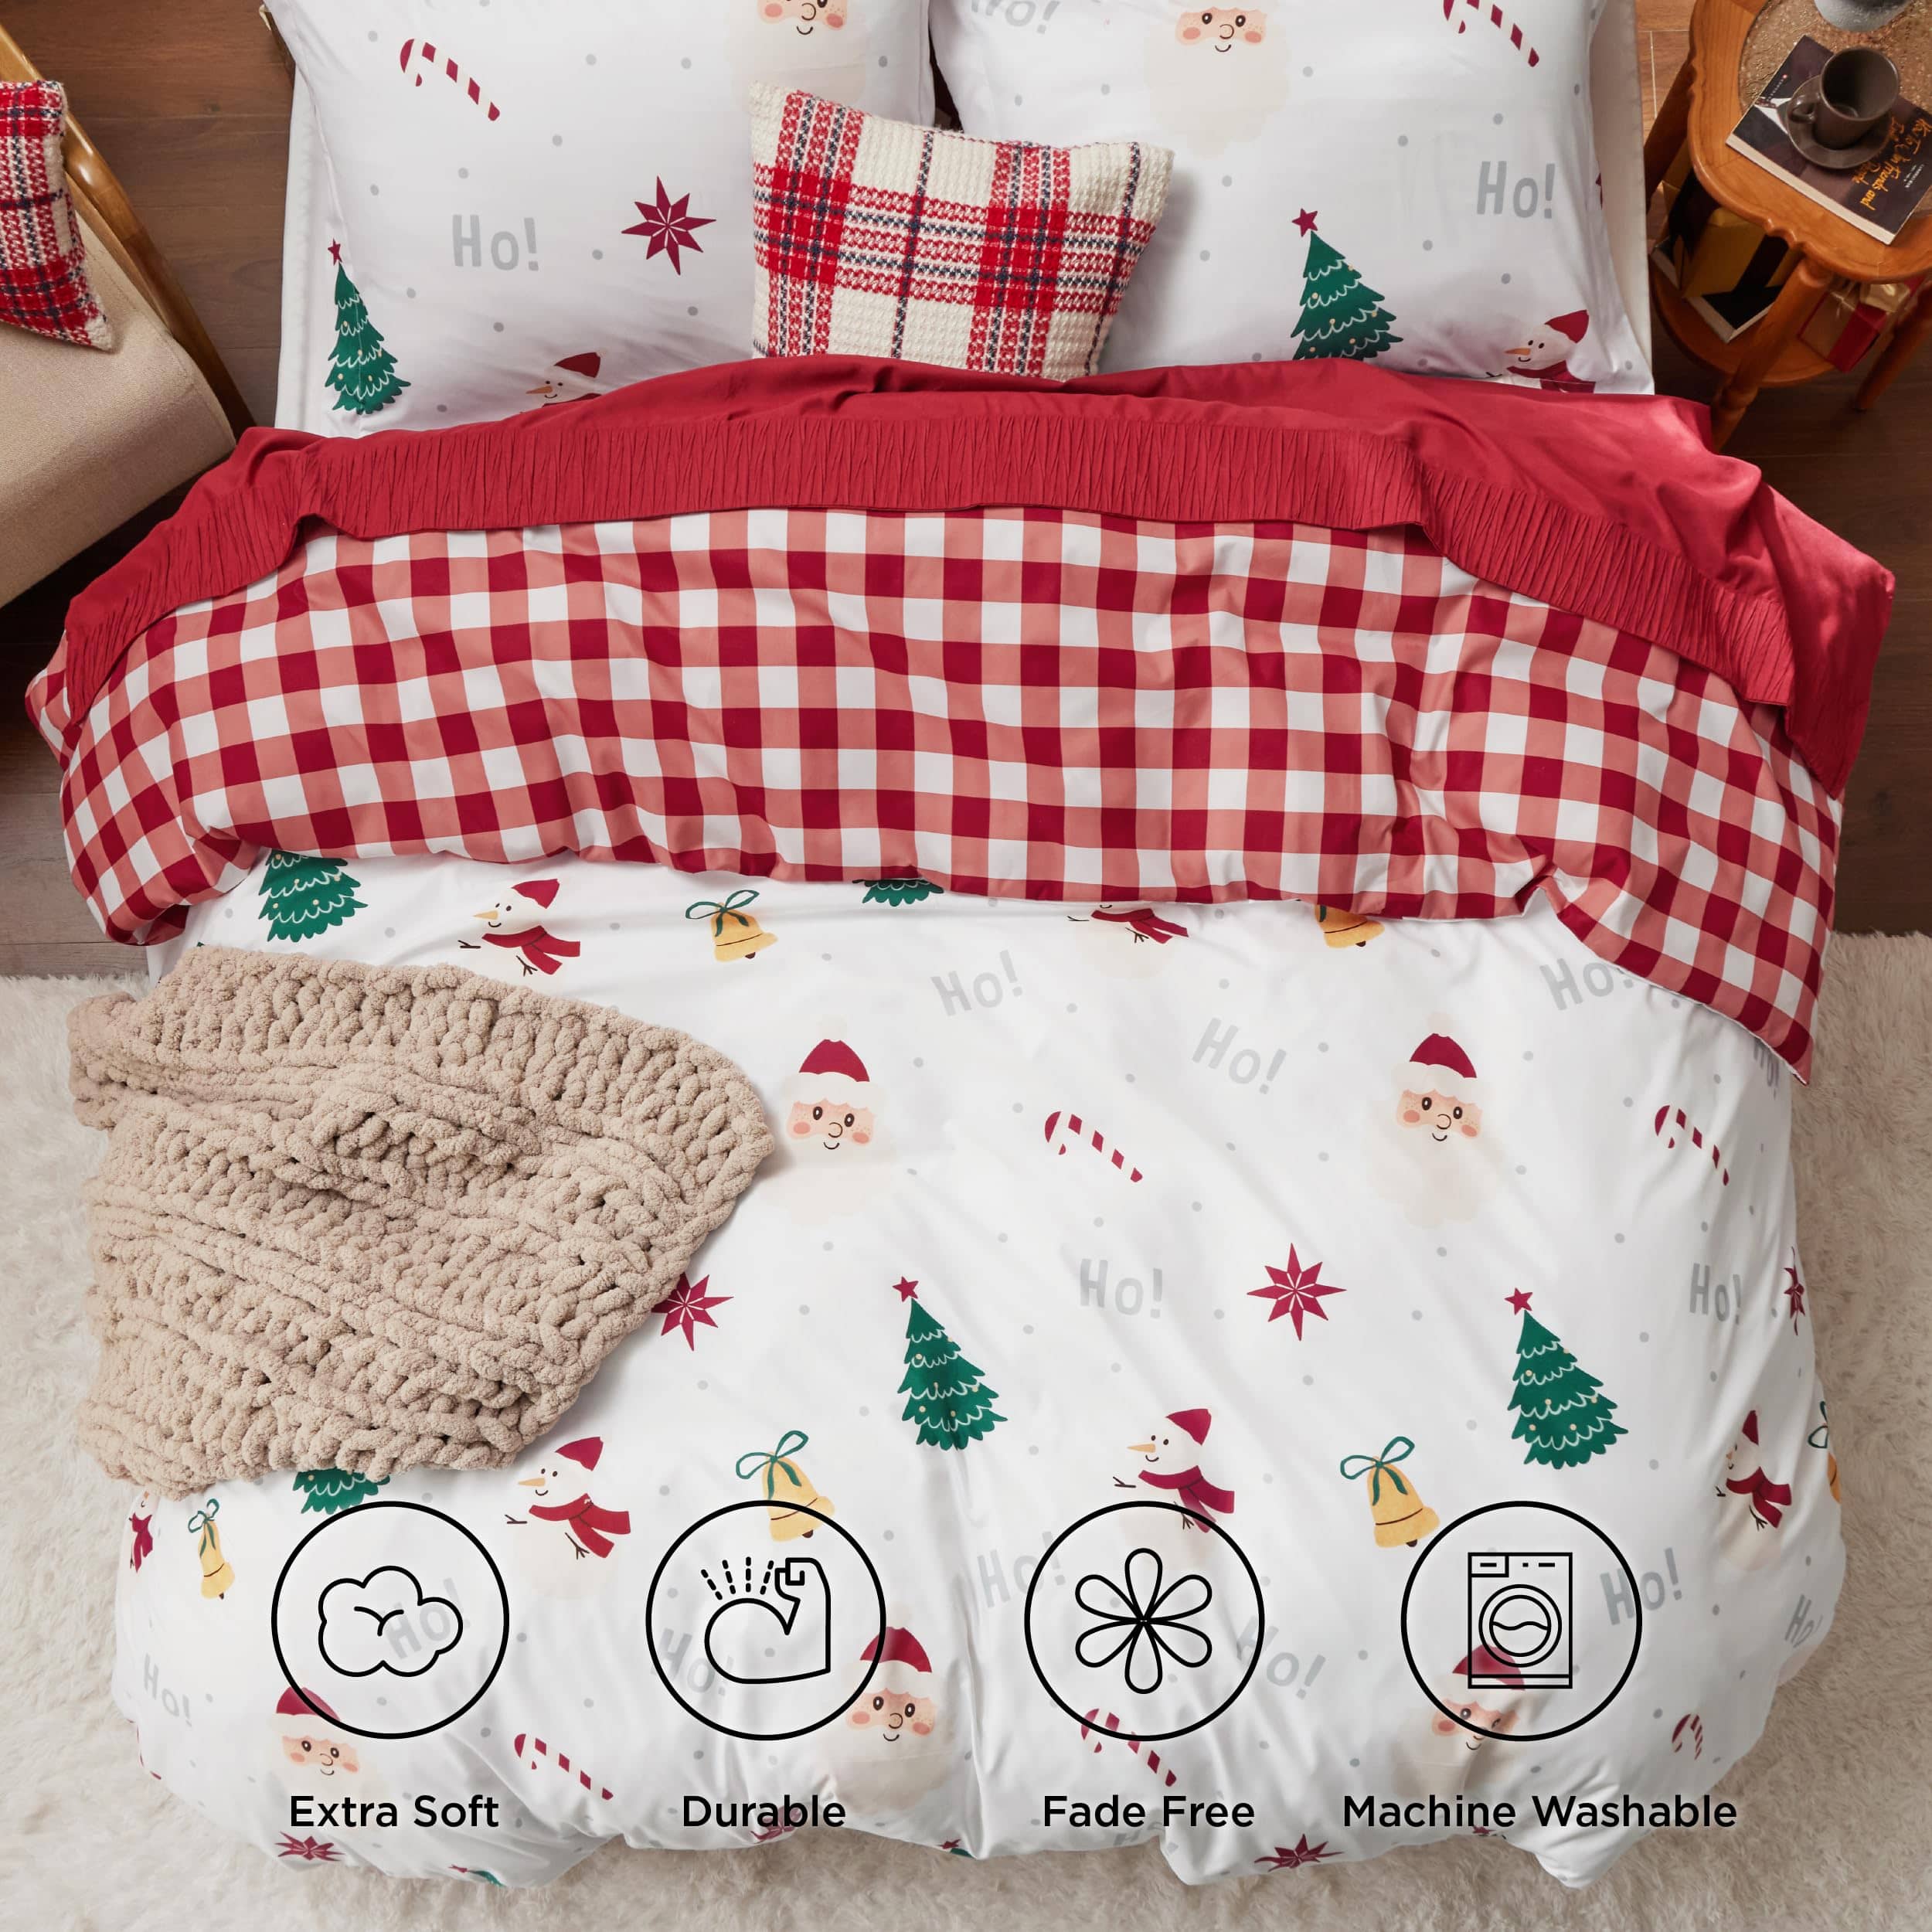 Bedsure Christmas Santa Duvet Cover Set